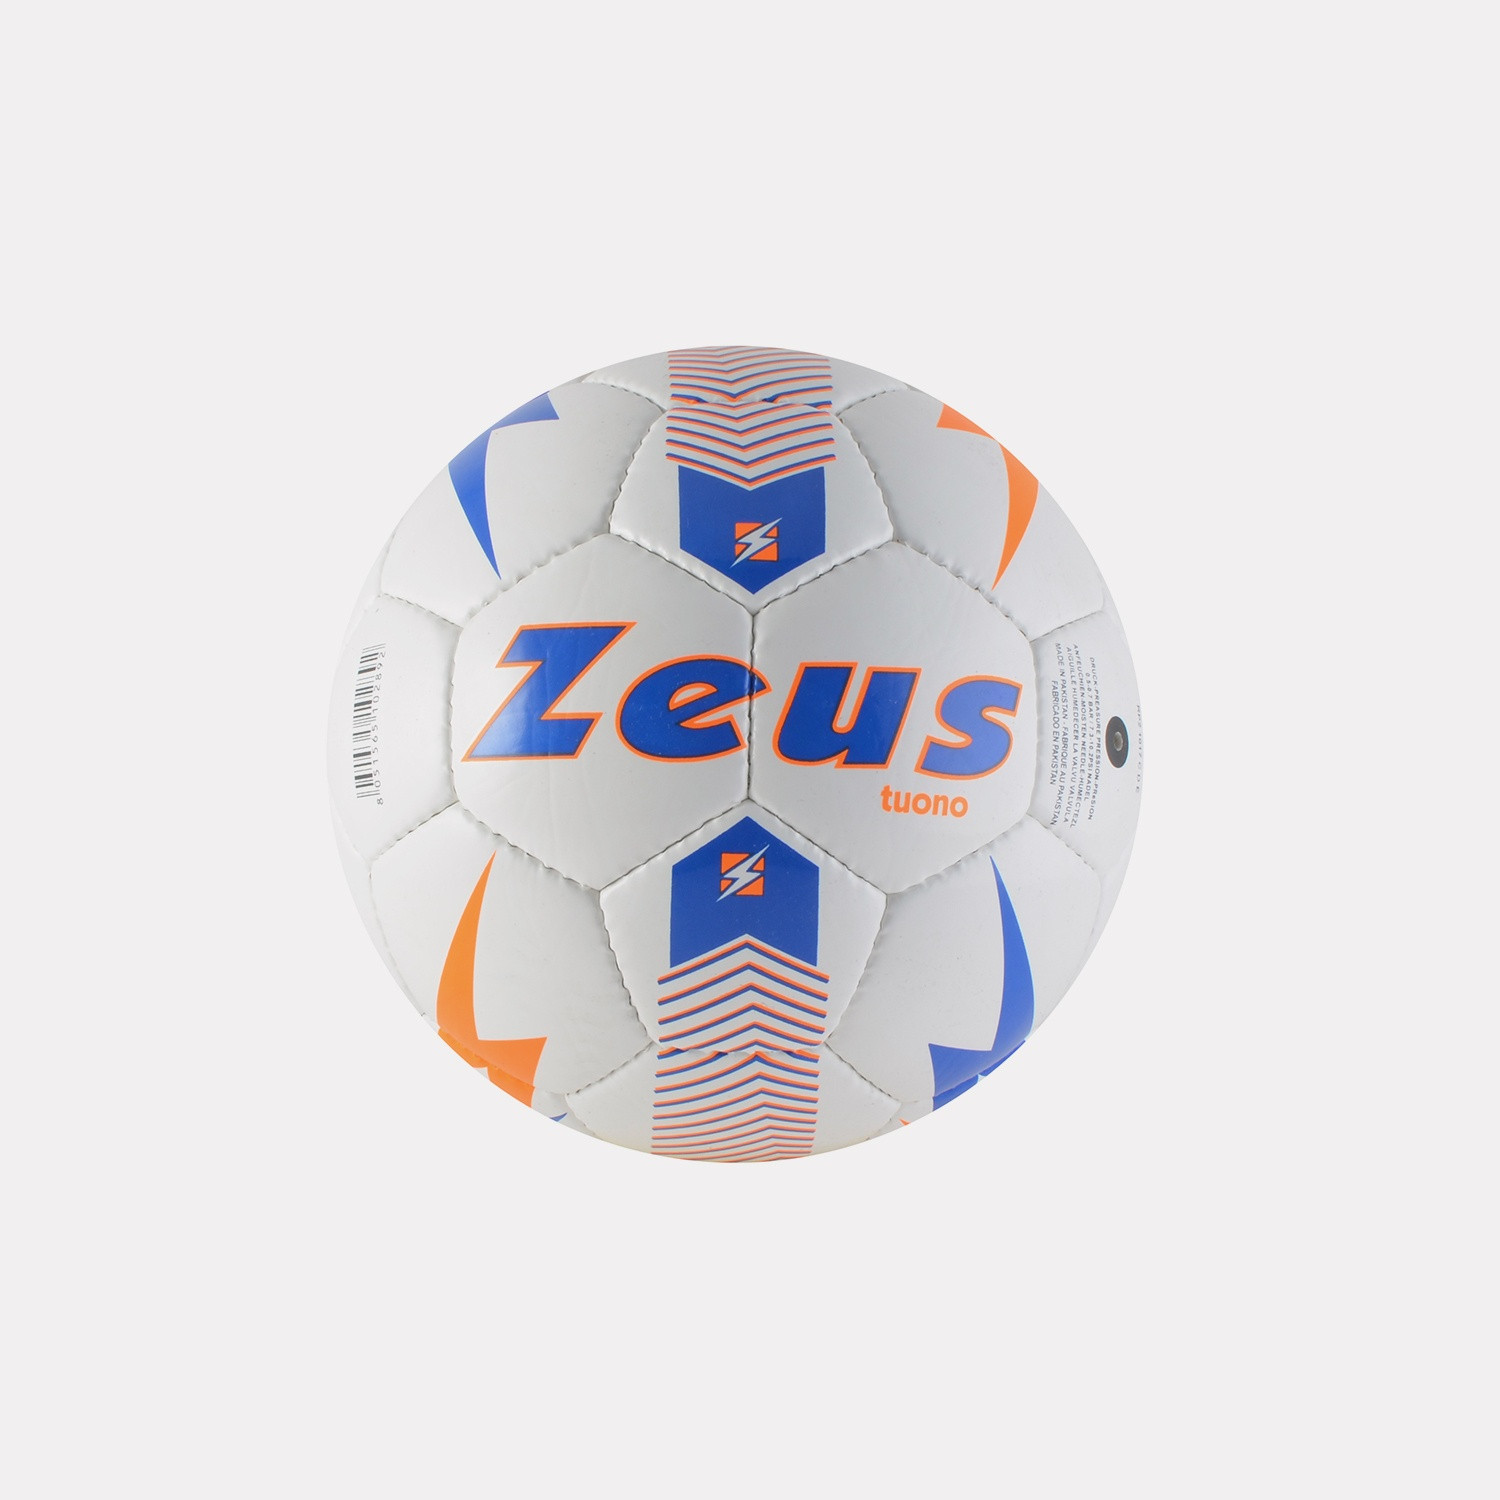 Zeus Pallone Tuono - Μπάλα Ποδοσφαίρου (9000017019_35371)